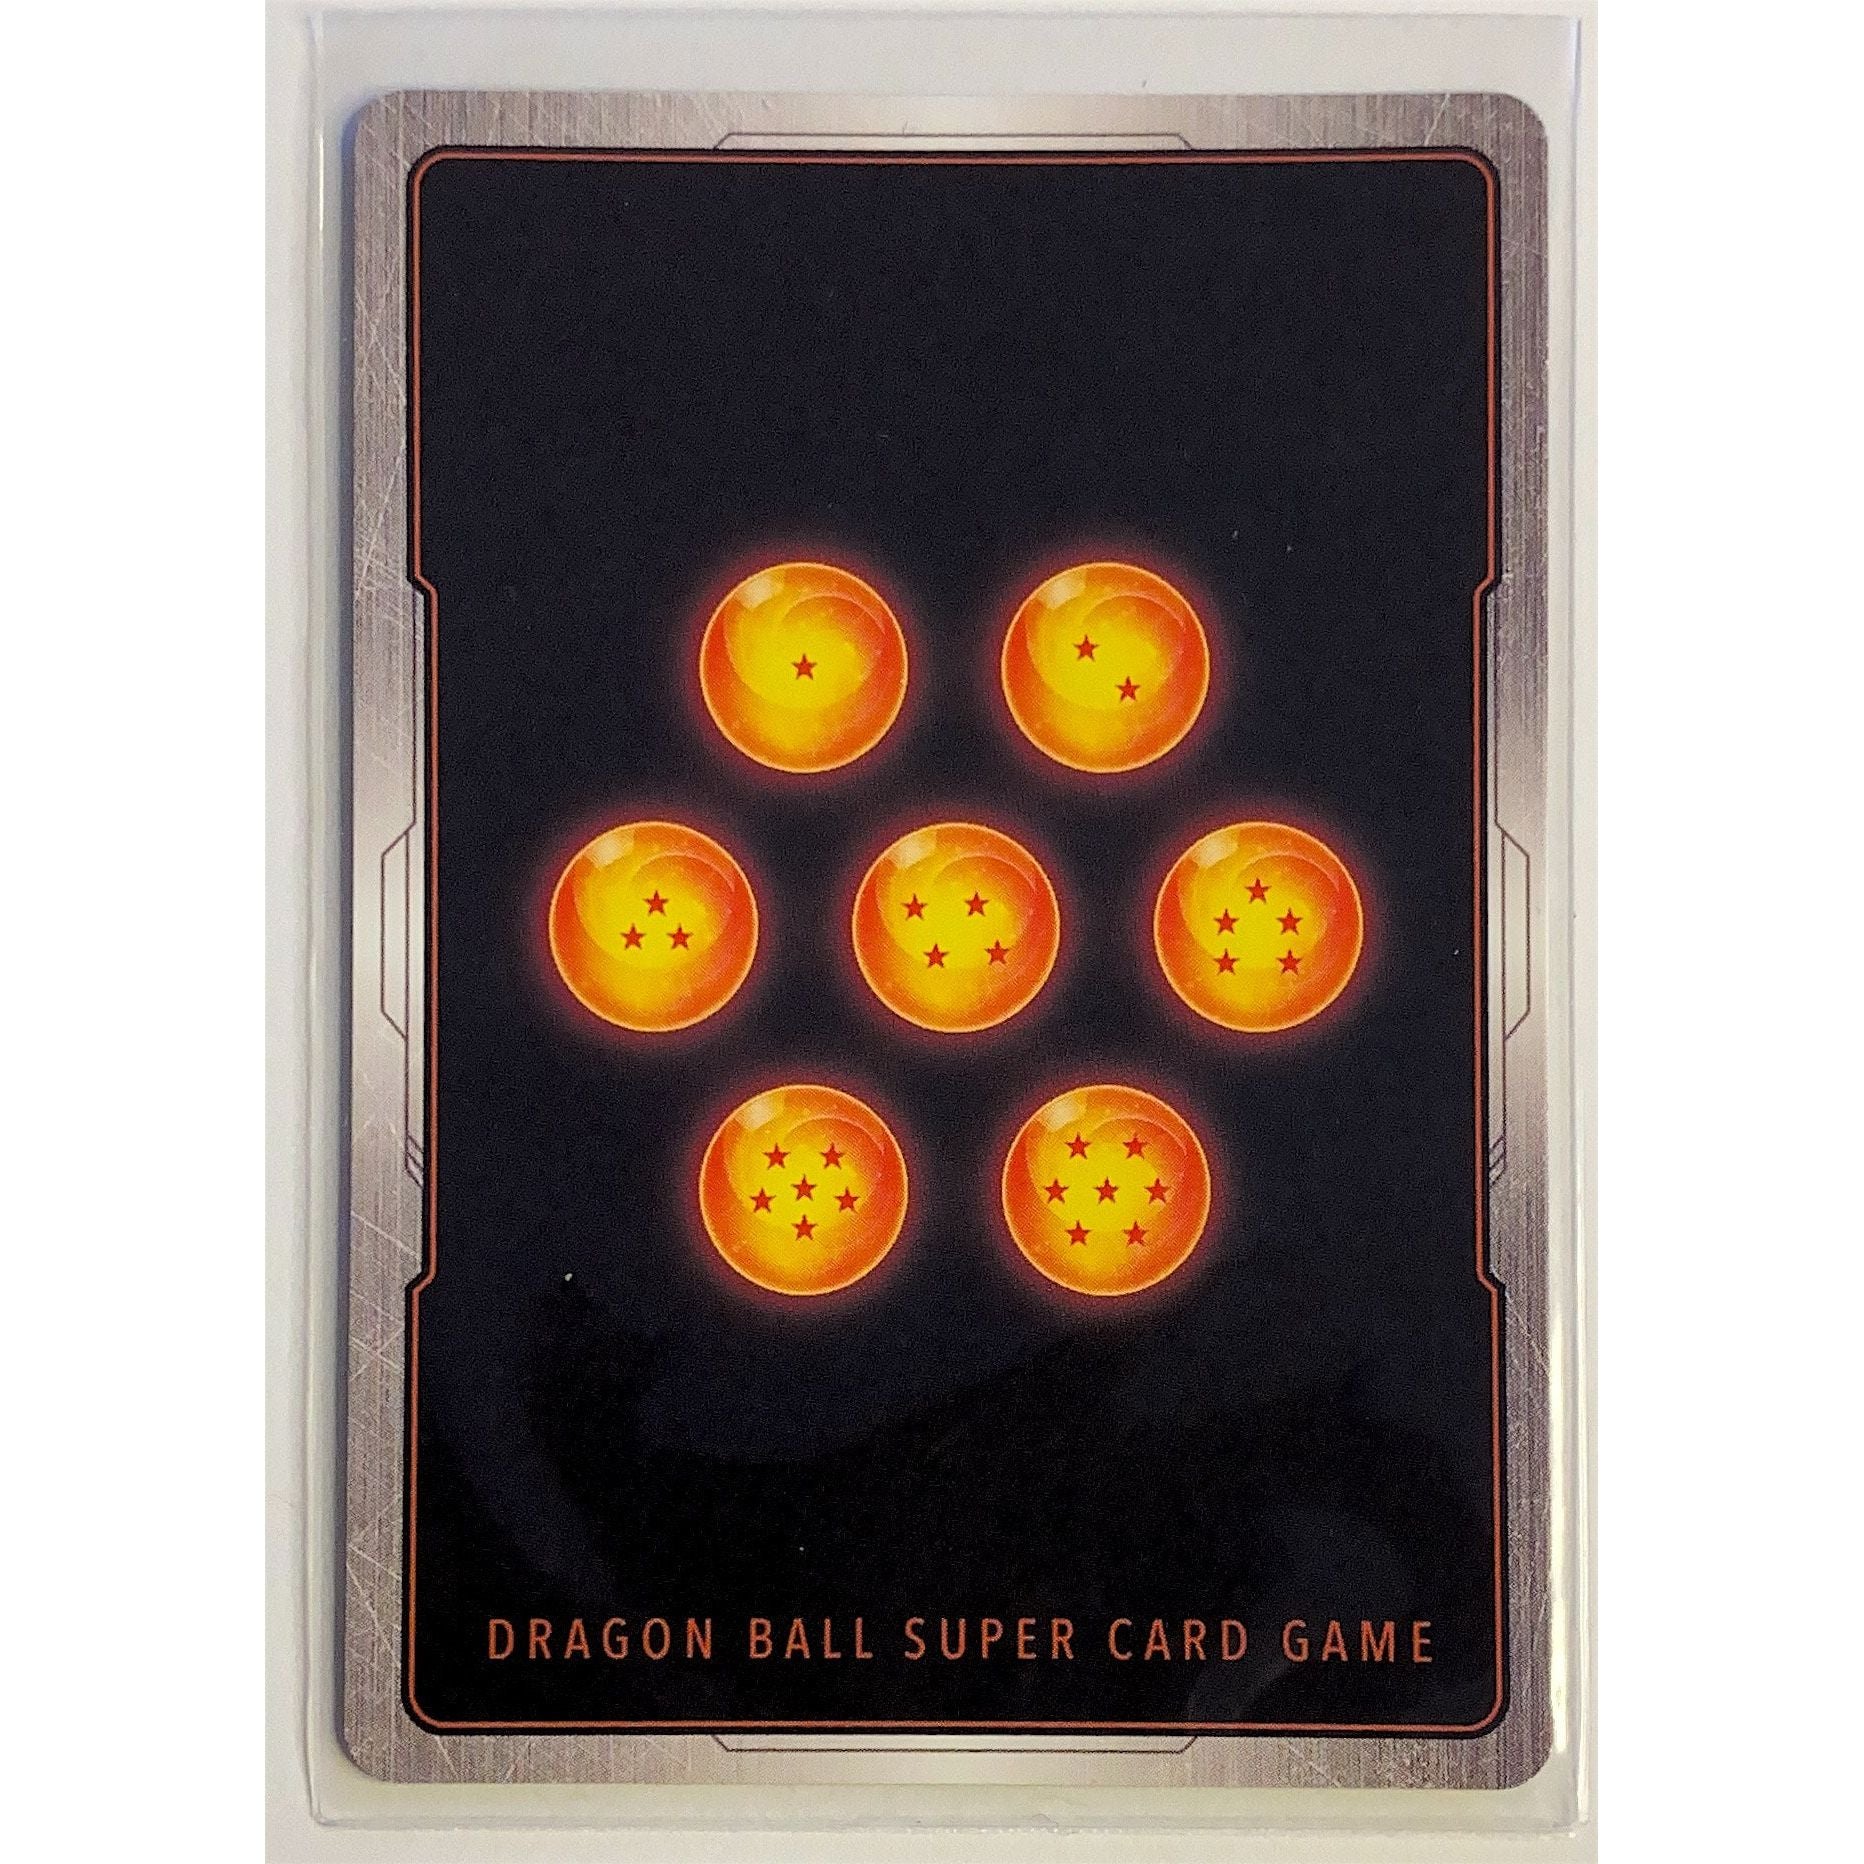  Dragon Ball Super Super Saiyan Son Goku BT14-006  Local Legends Cards & Collectibles